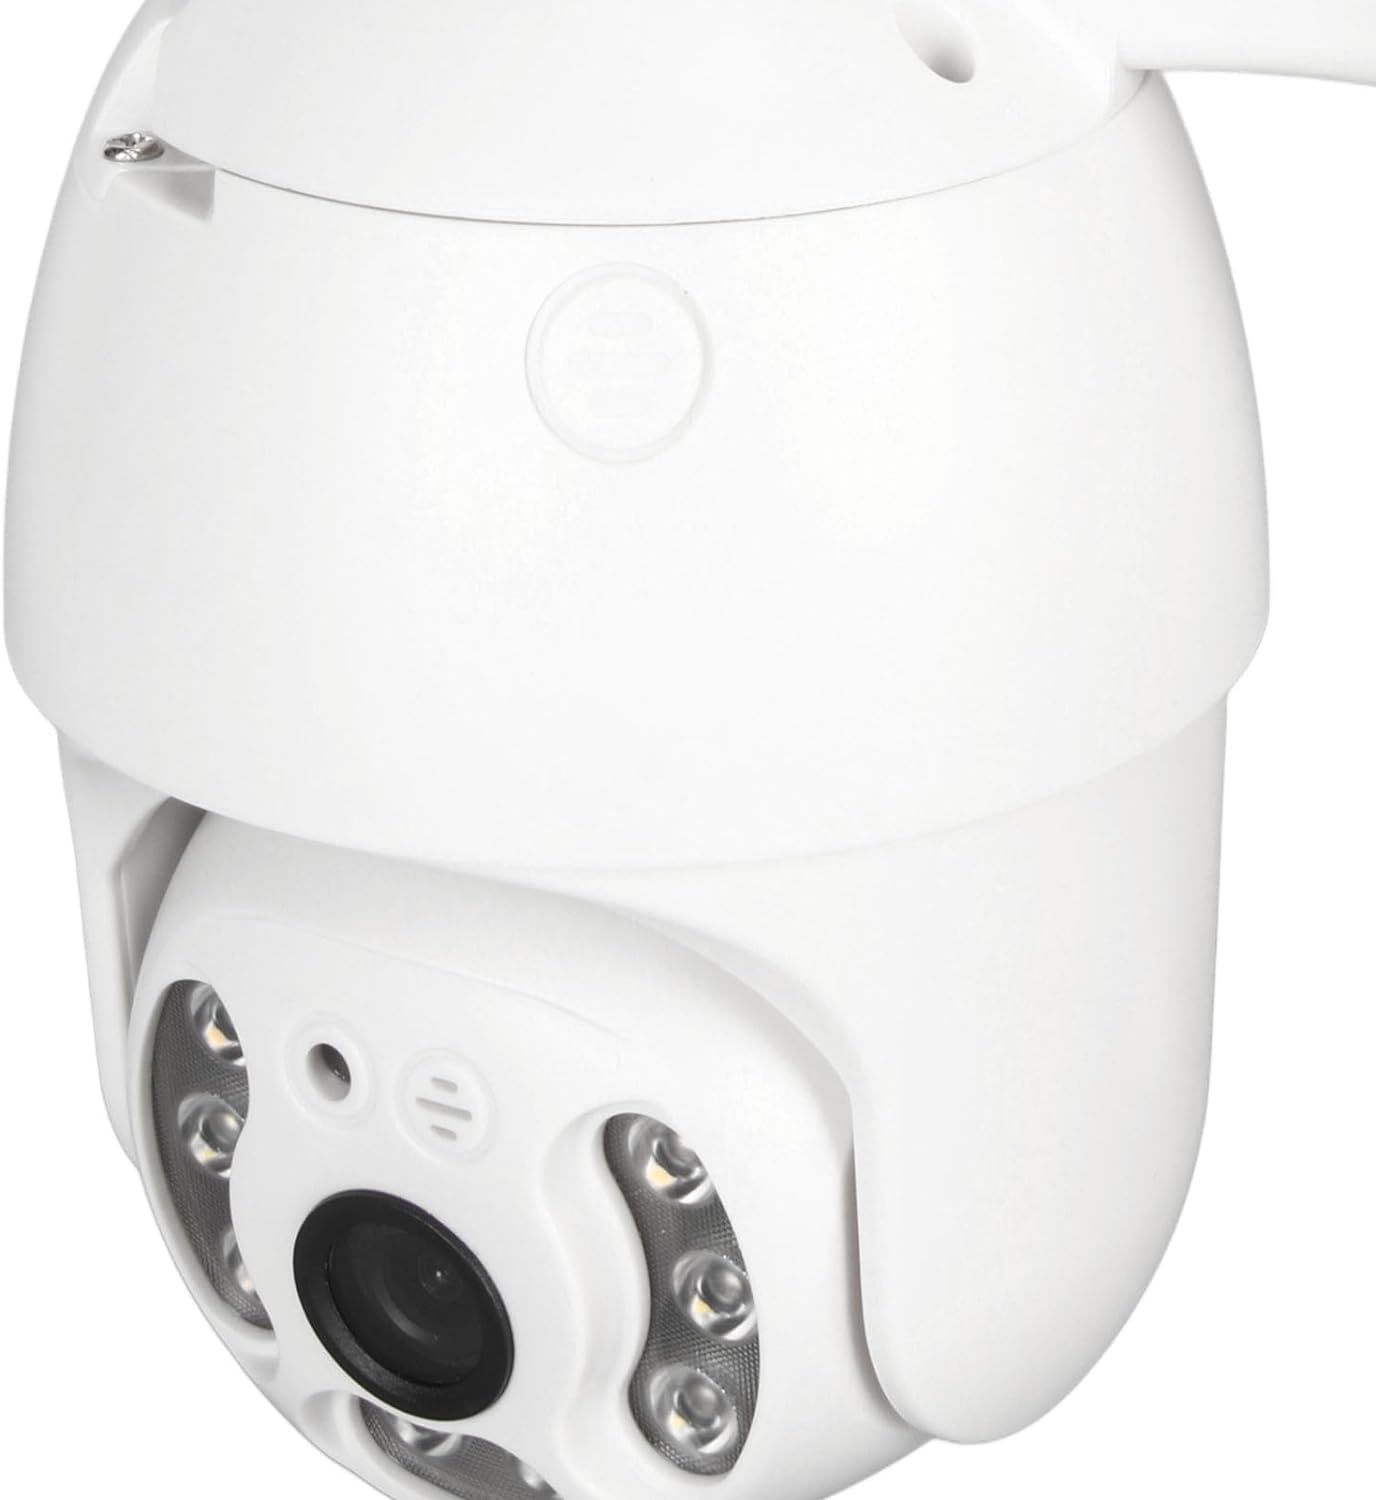 Outdoor Security Camera, Surveillance Camera 2.4GHz WiFi for Shop (US Plug)